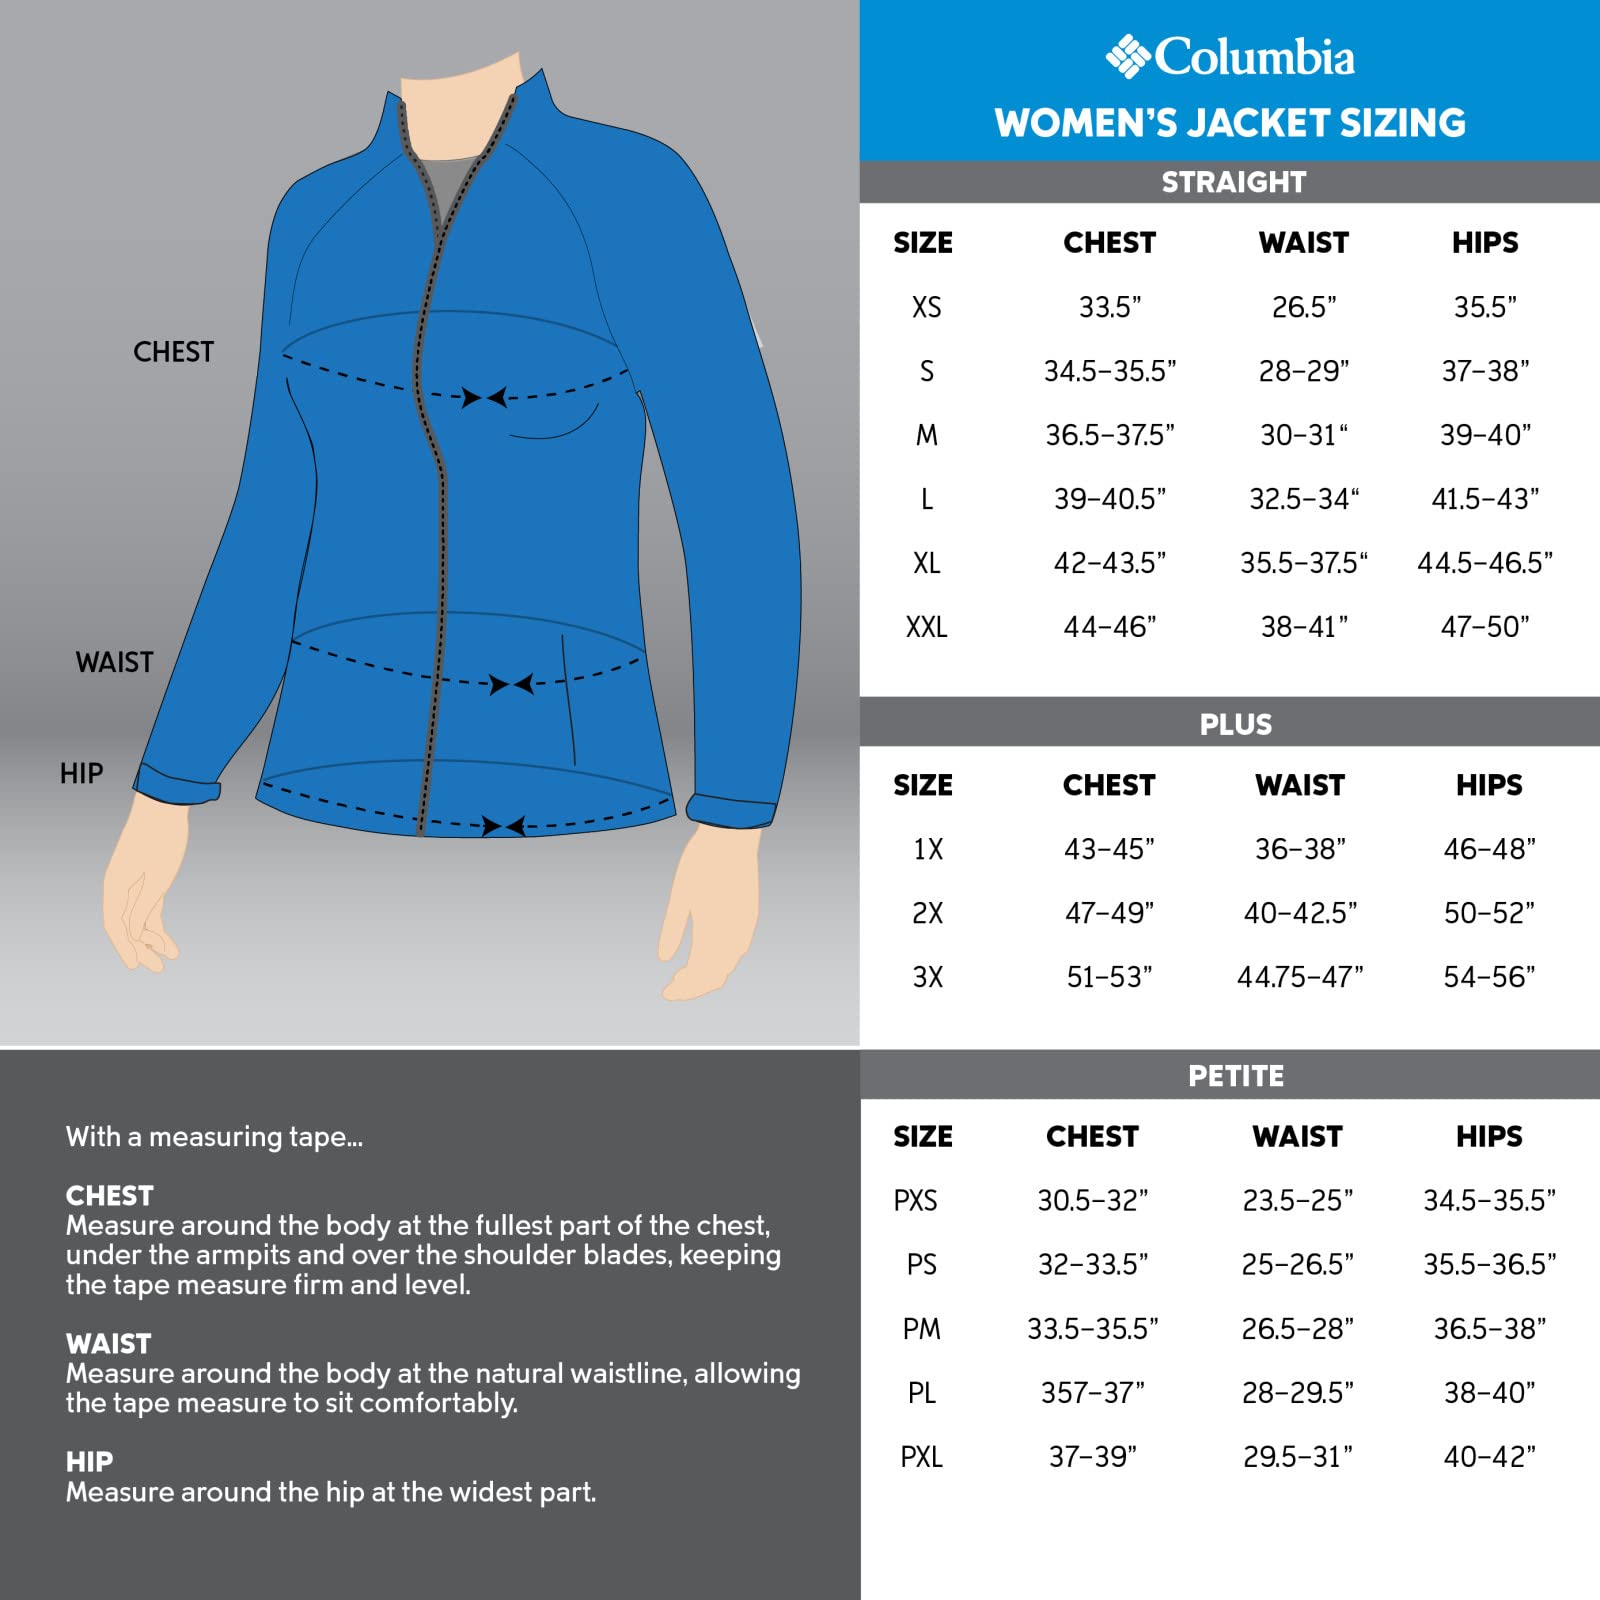 Columbia Women’s Switchback III Waterproof Rain Jacket, Spring Blue, XX-Large